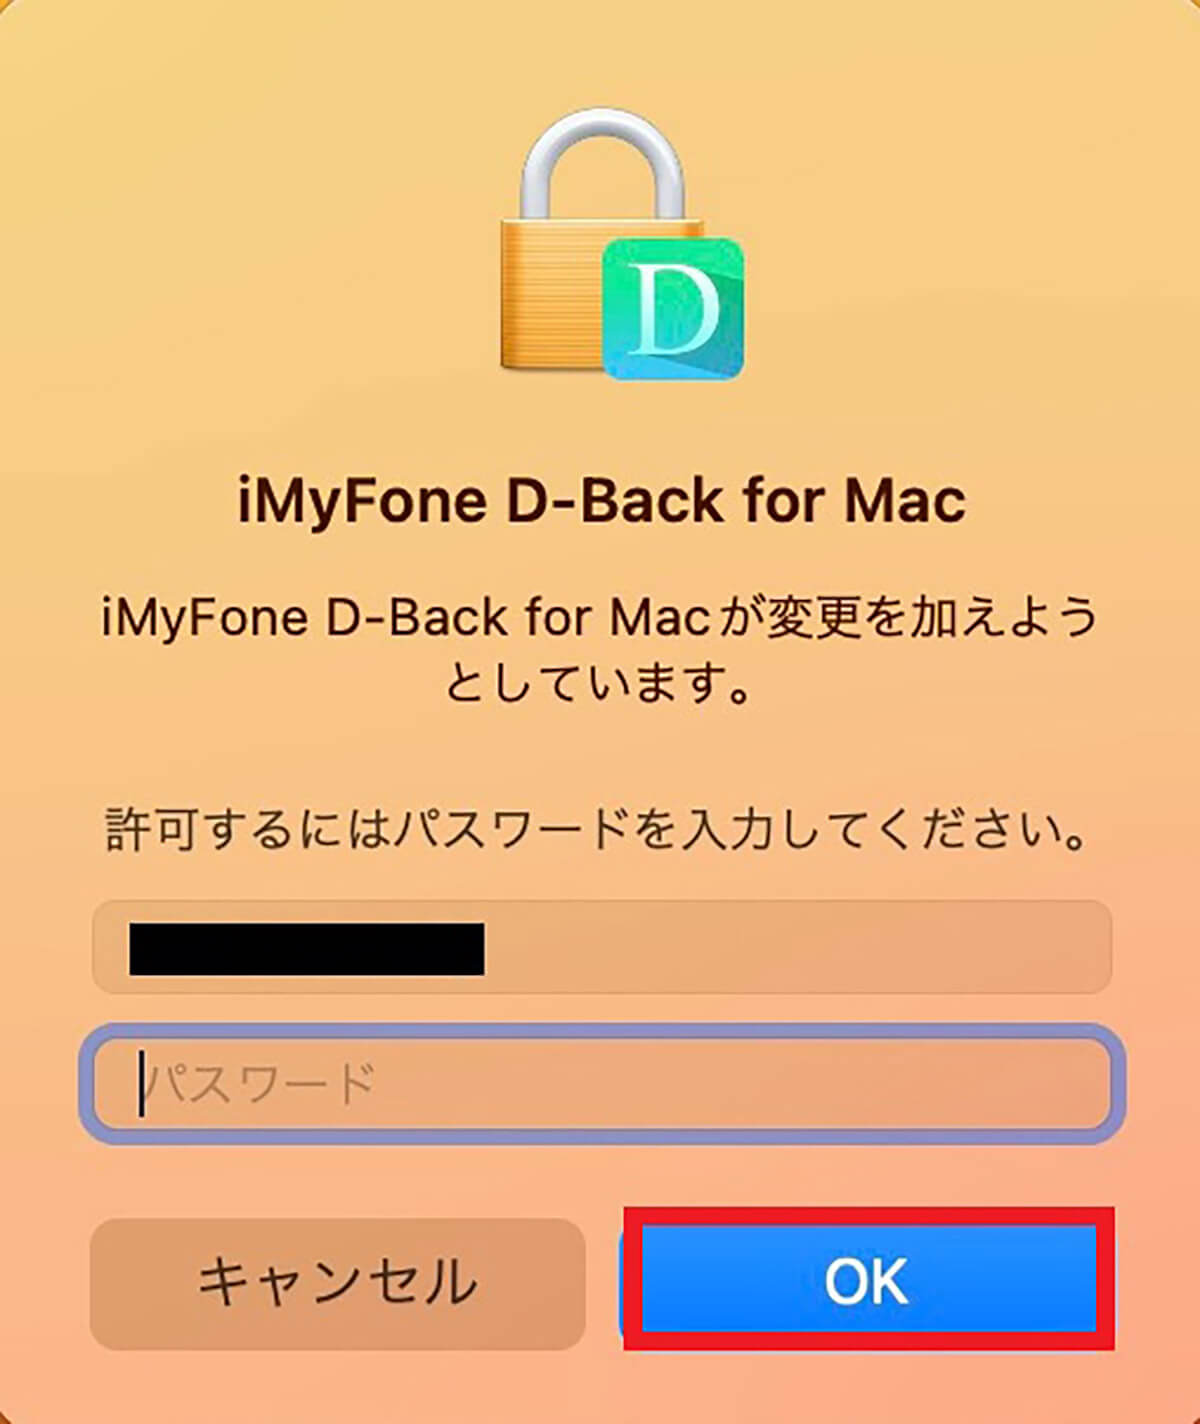 「Time Machine」でデータを復元できない時の対処法として「iMyFone D-Back for Mac」を紹介11